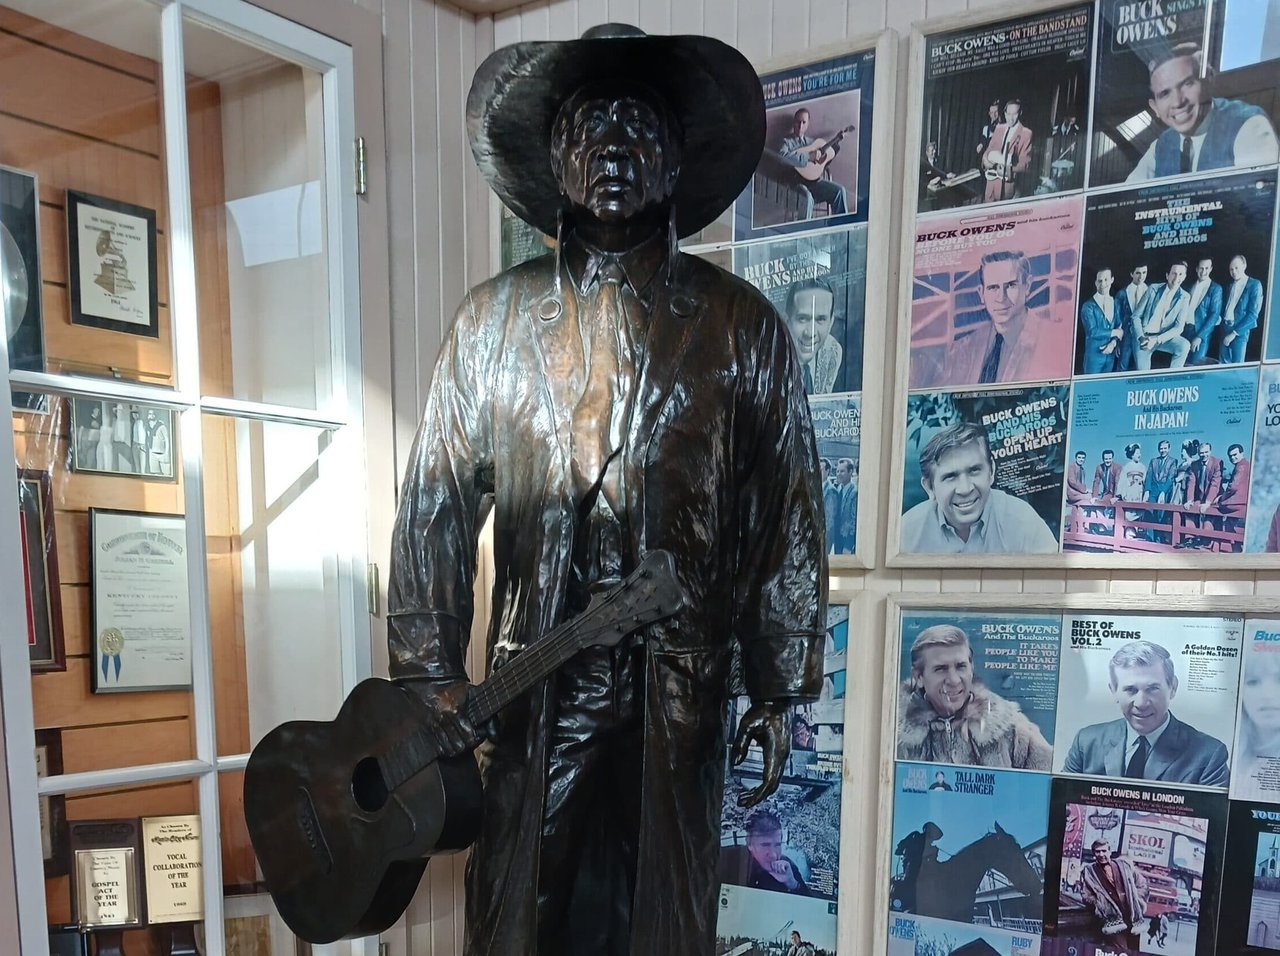 A statue of Buck Owens.